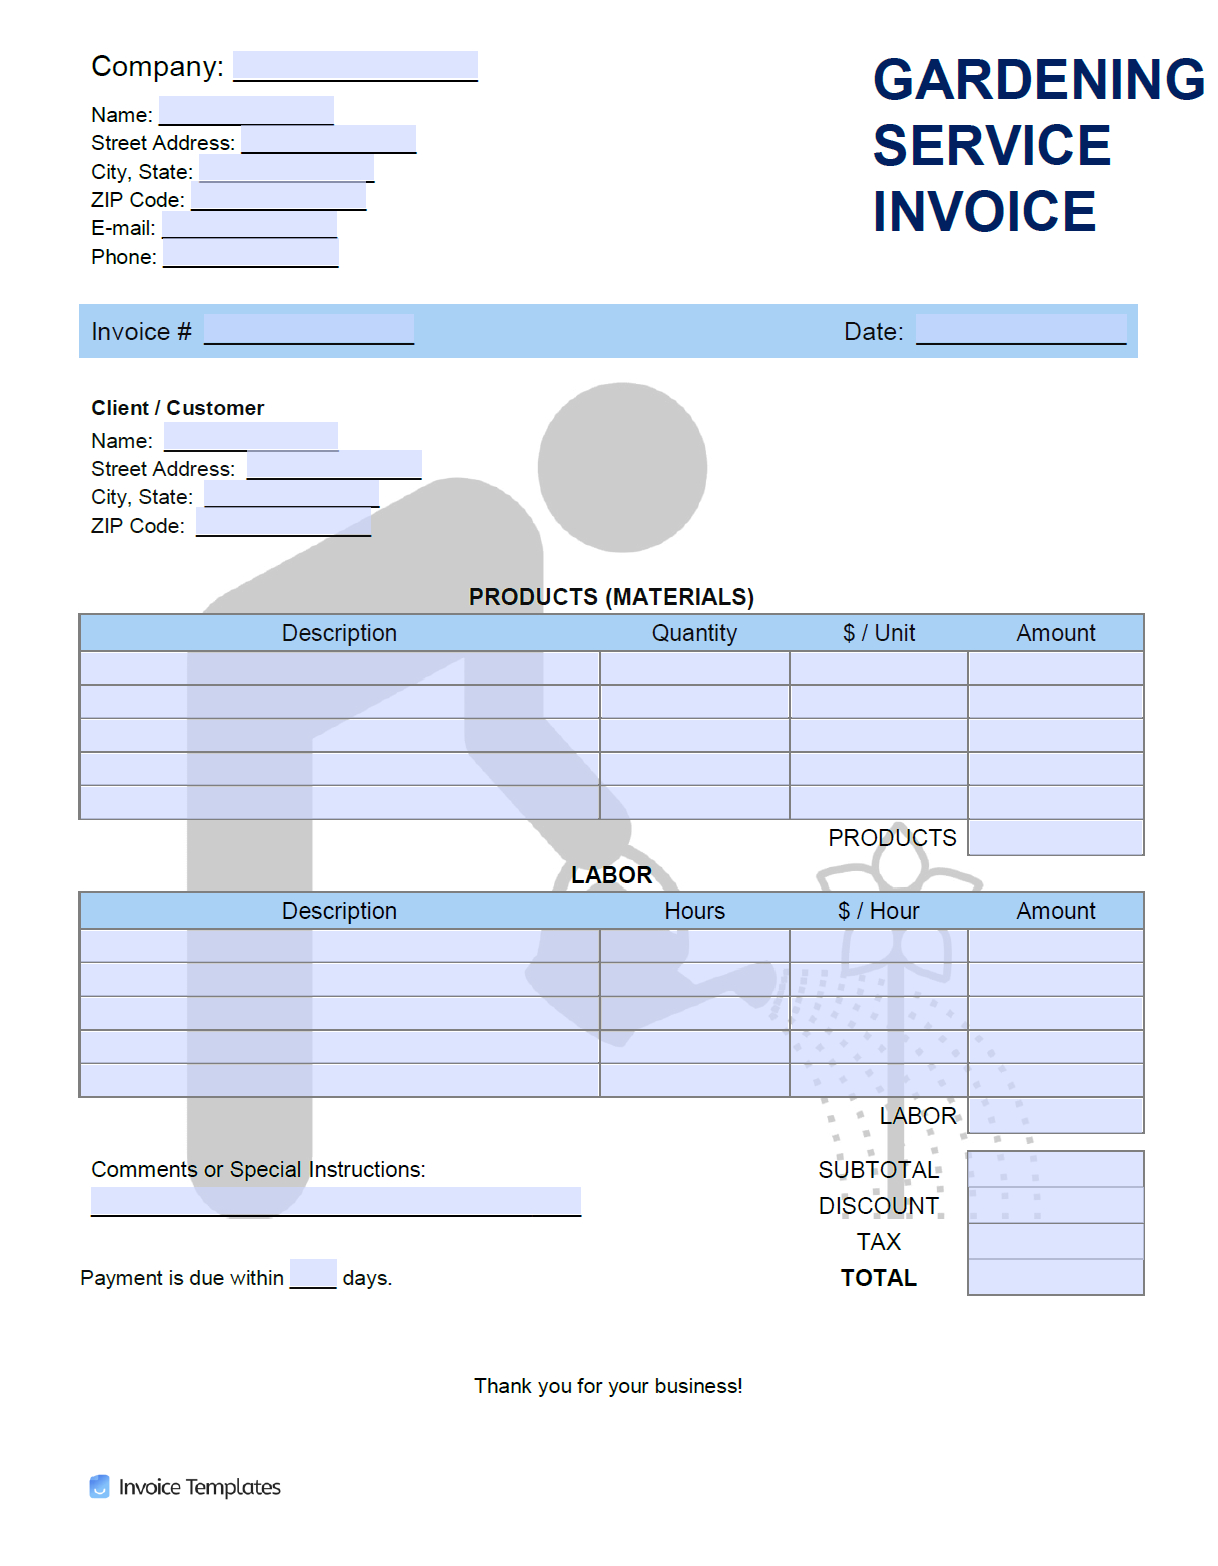 Free Gardening Service Invoice Template | Pdf | Word | Excel within Gardening Invoice Template